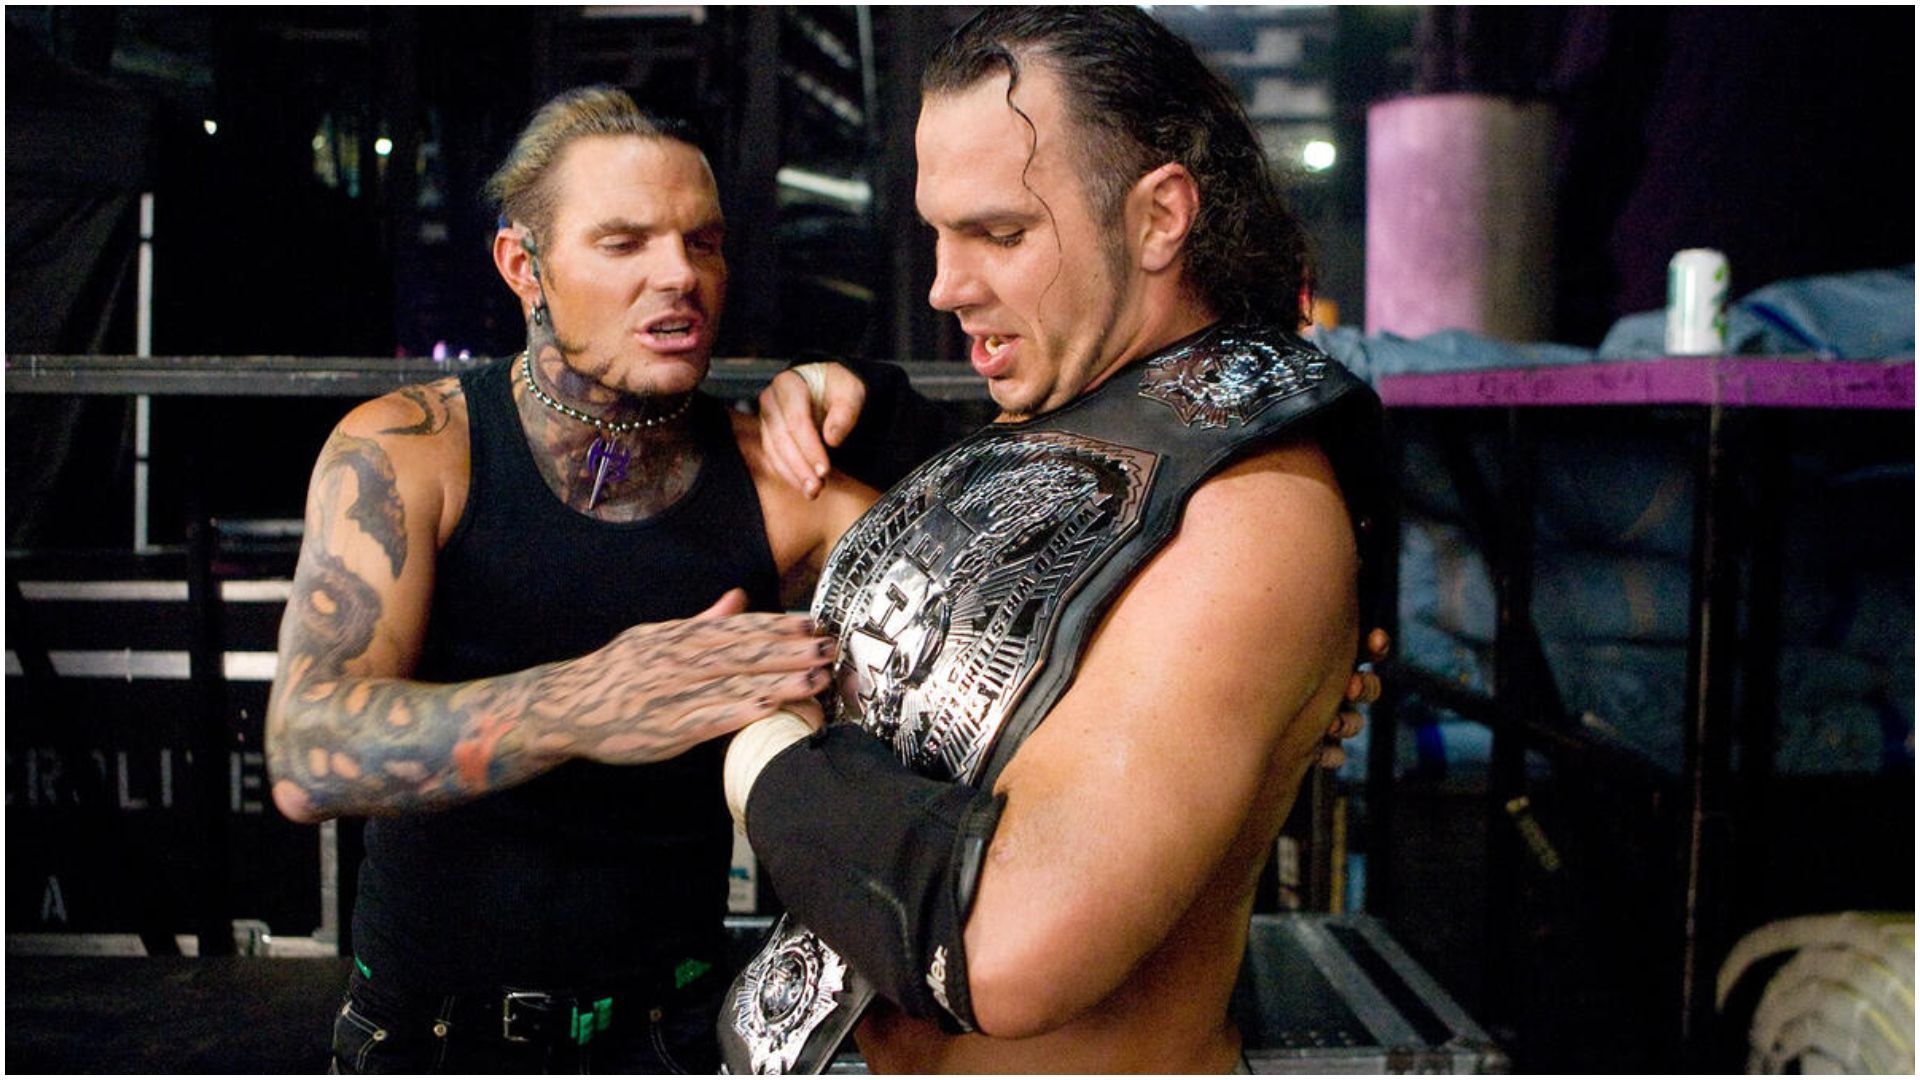 Jeff Hardy and Matt Hardy at WWE backstage. (Image source: WWE.com)